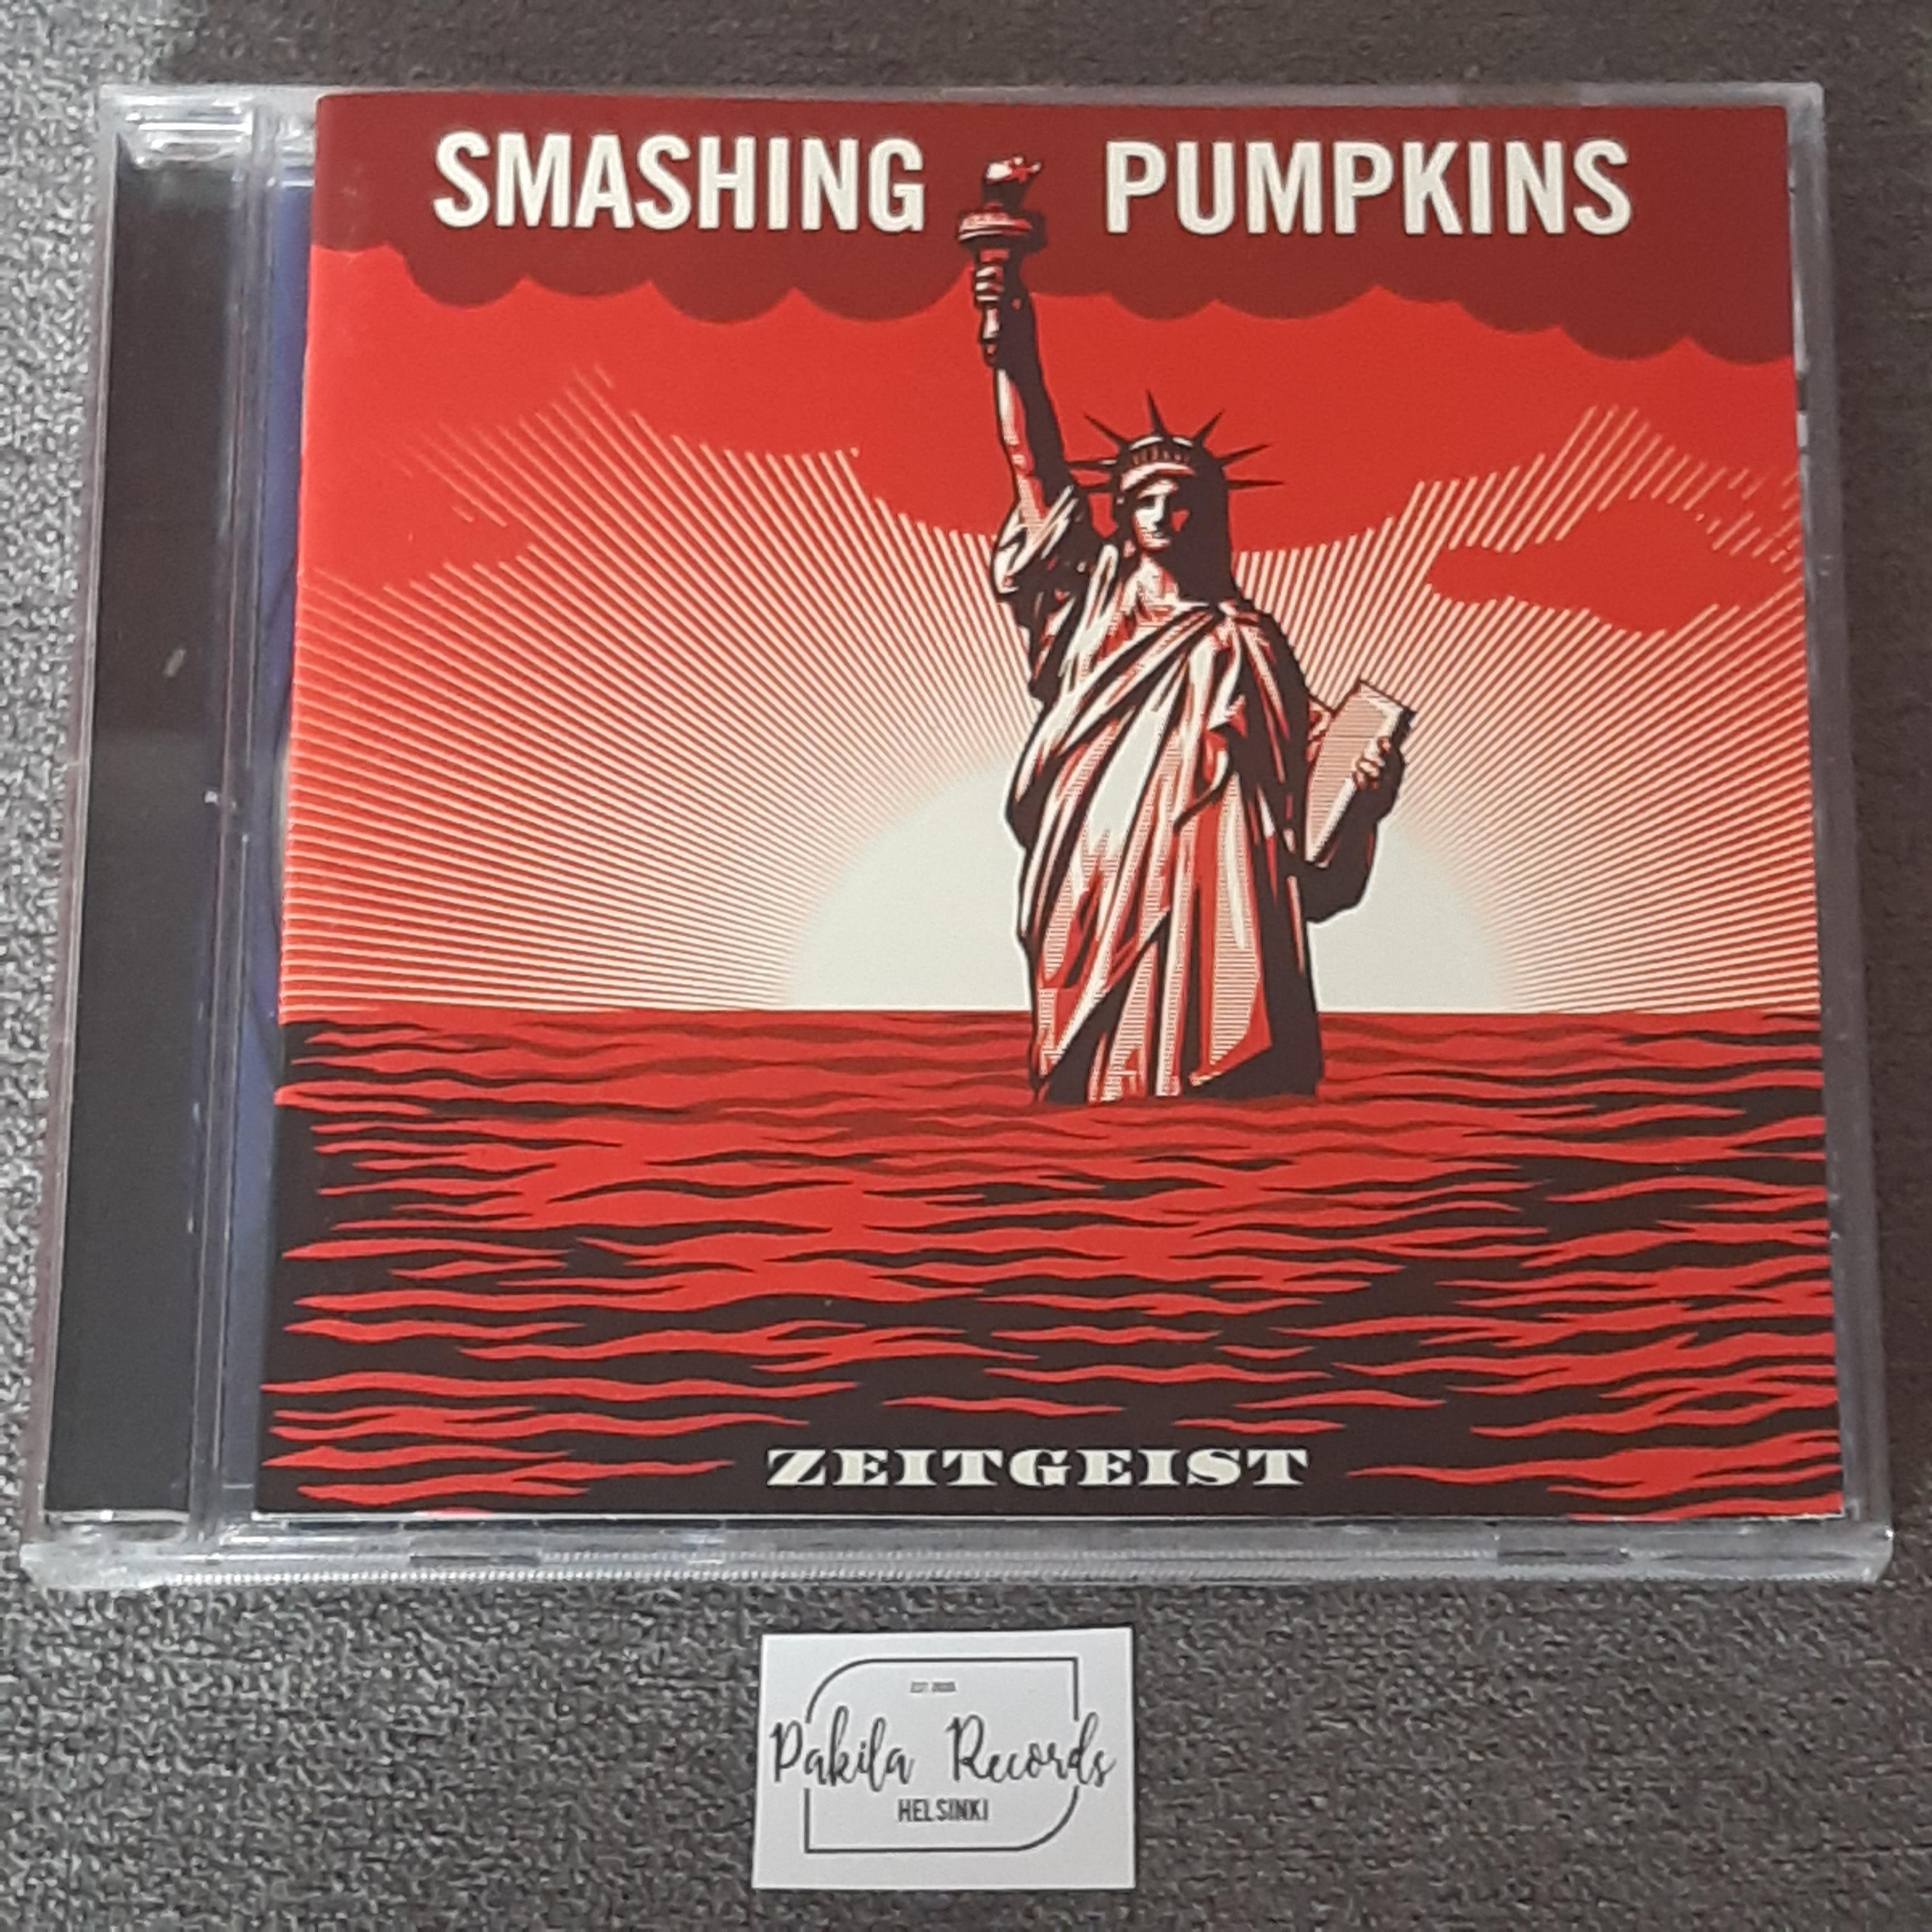 Smashing Pumpkins - Zeitgeist - CD (käytetty)